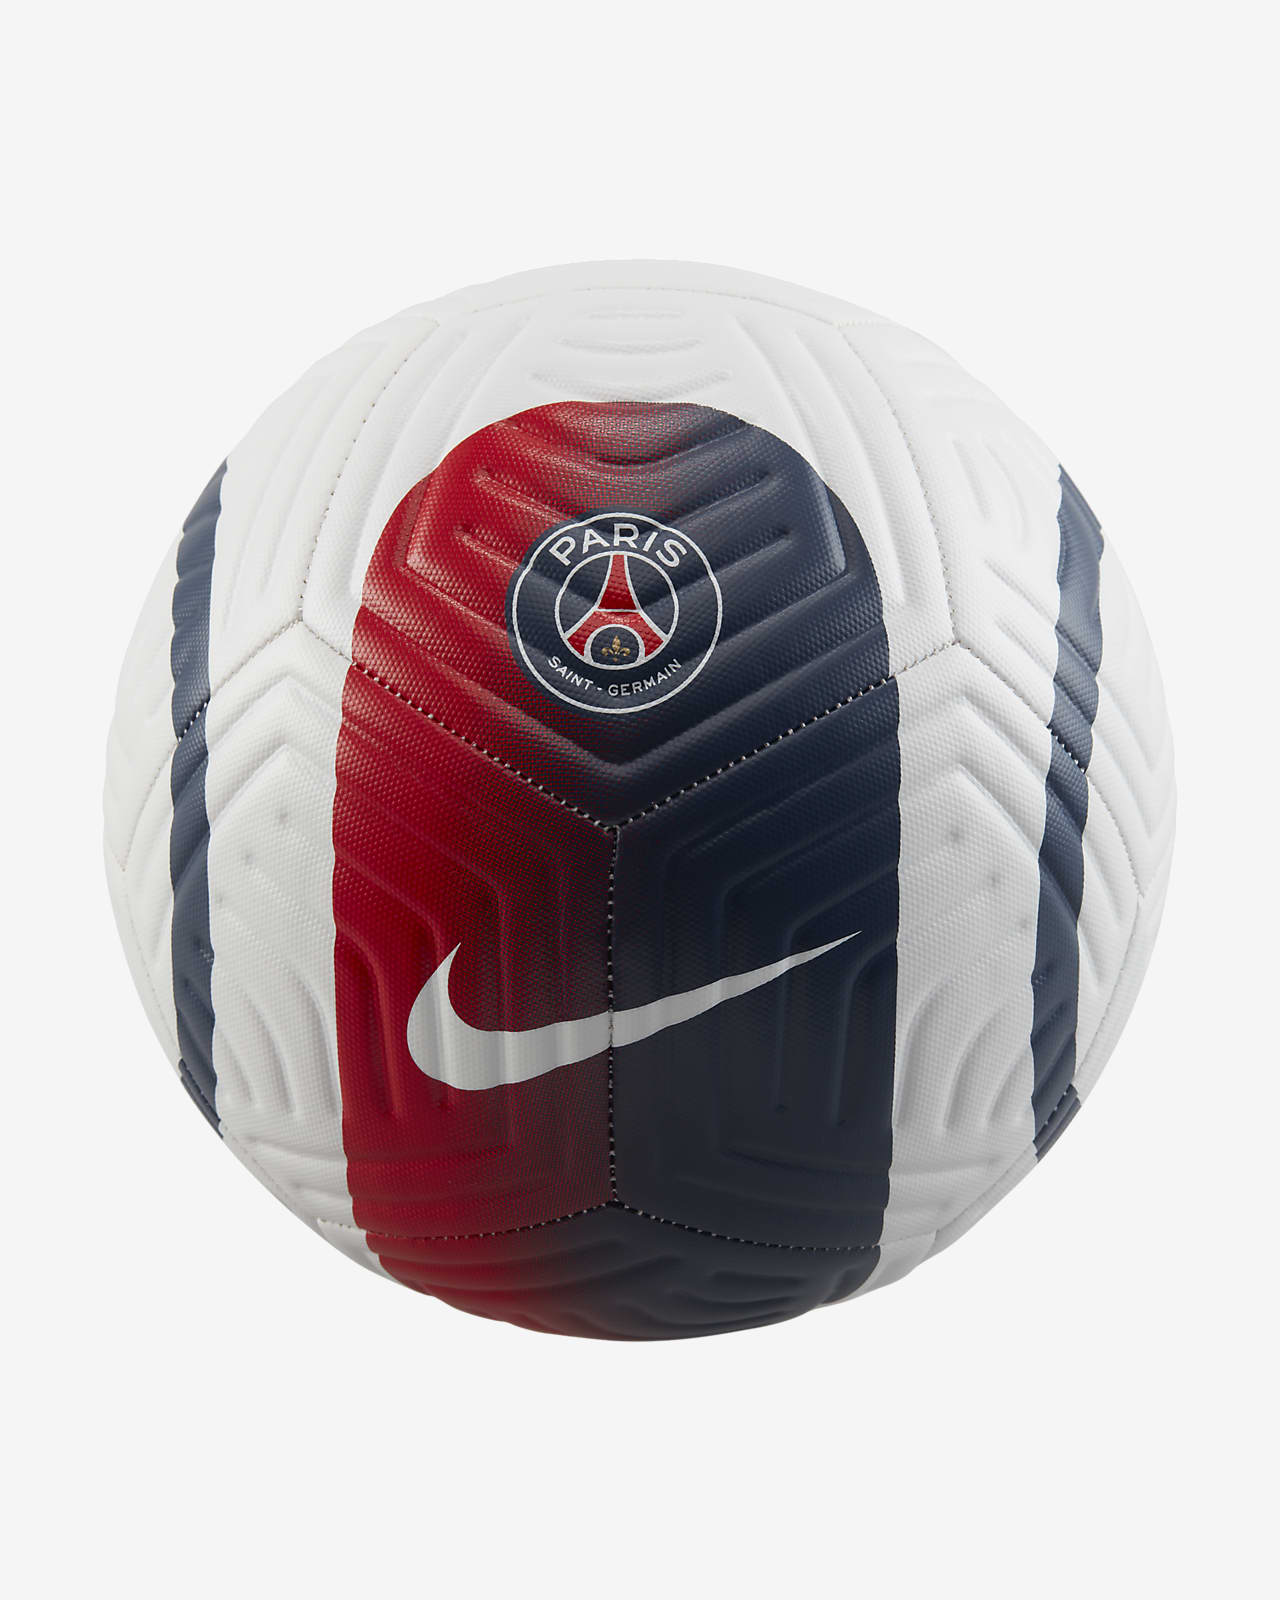 Saint-Germain Academy Soccer Ball. Nike JP